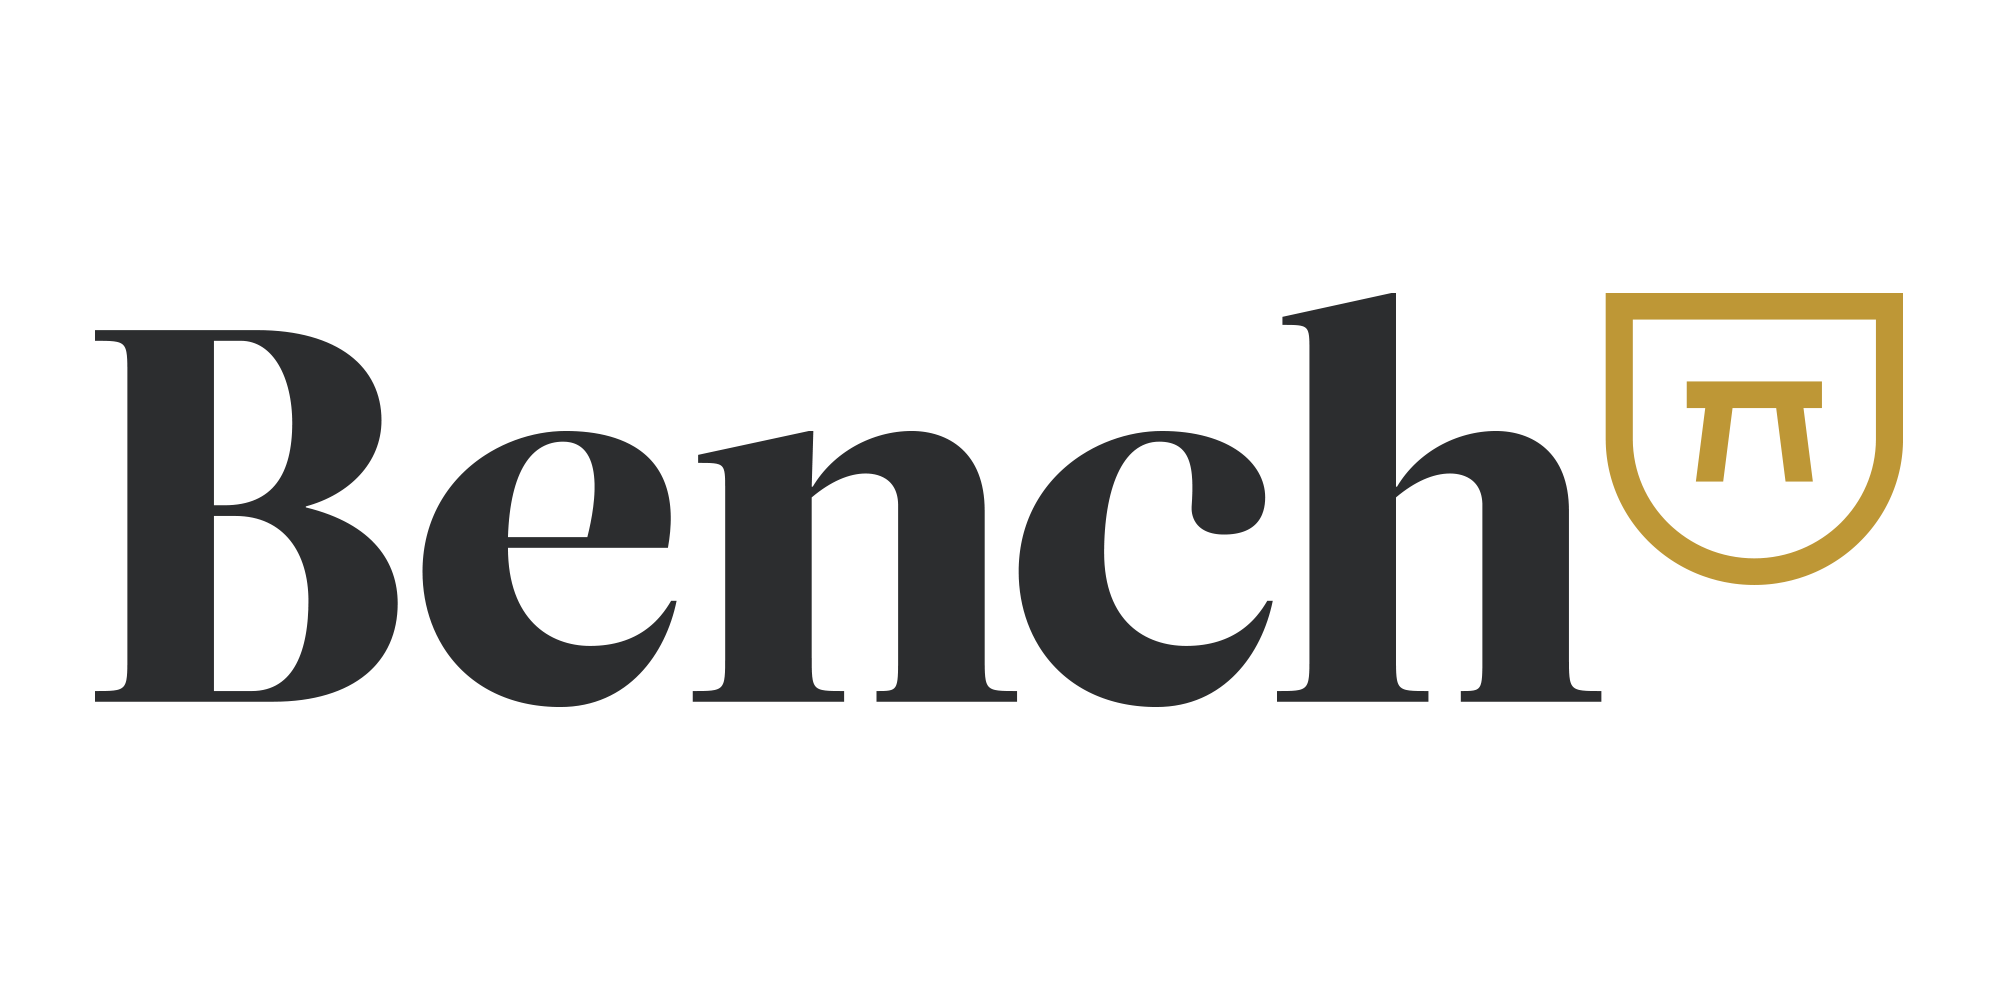 Bench Logo